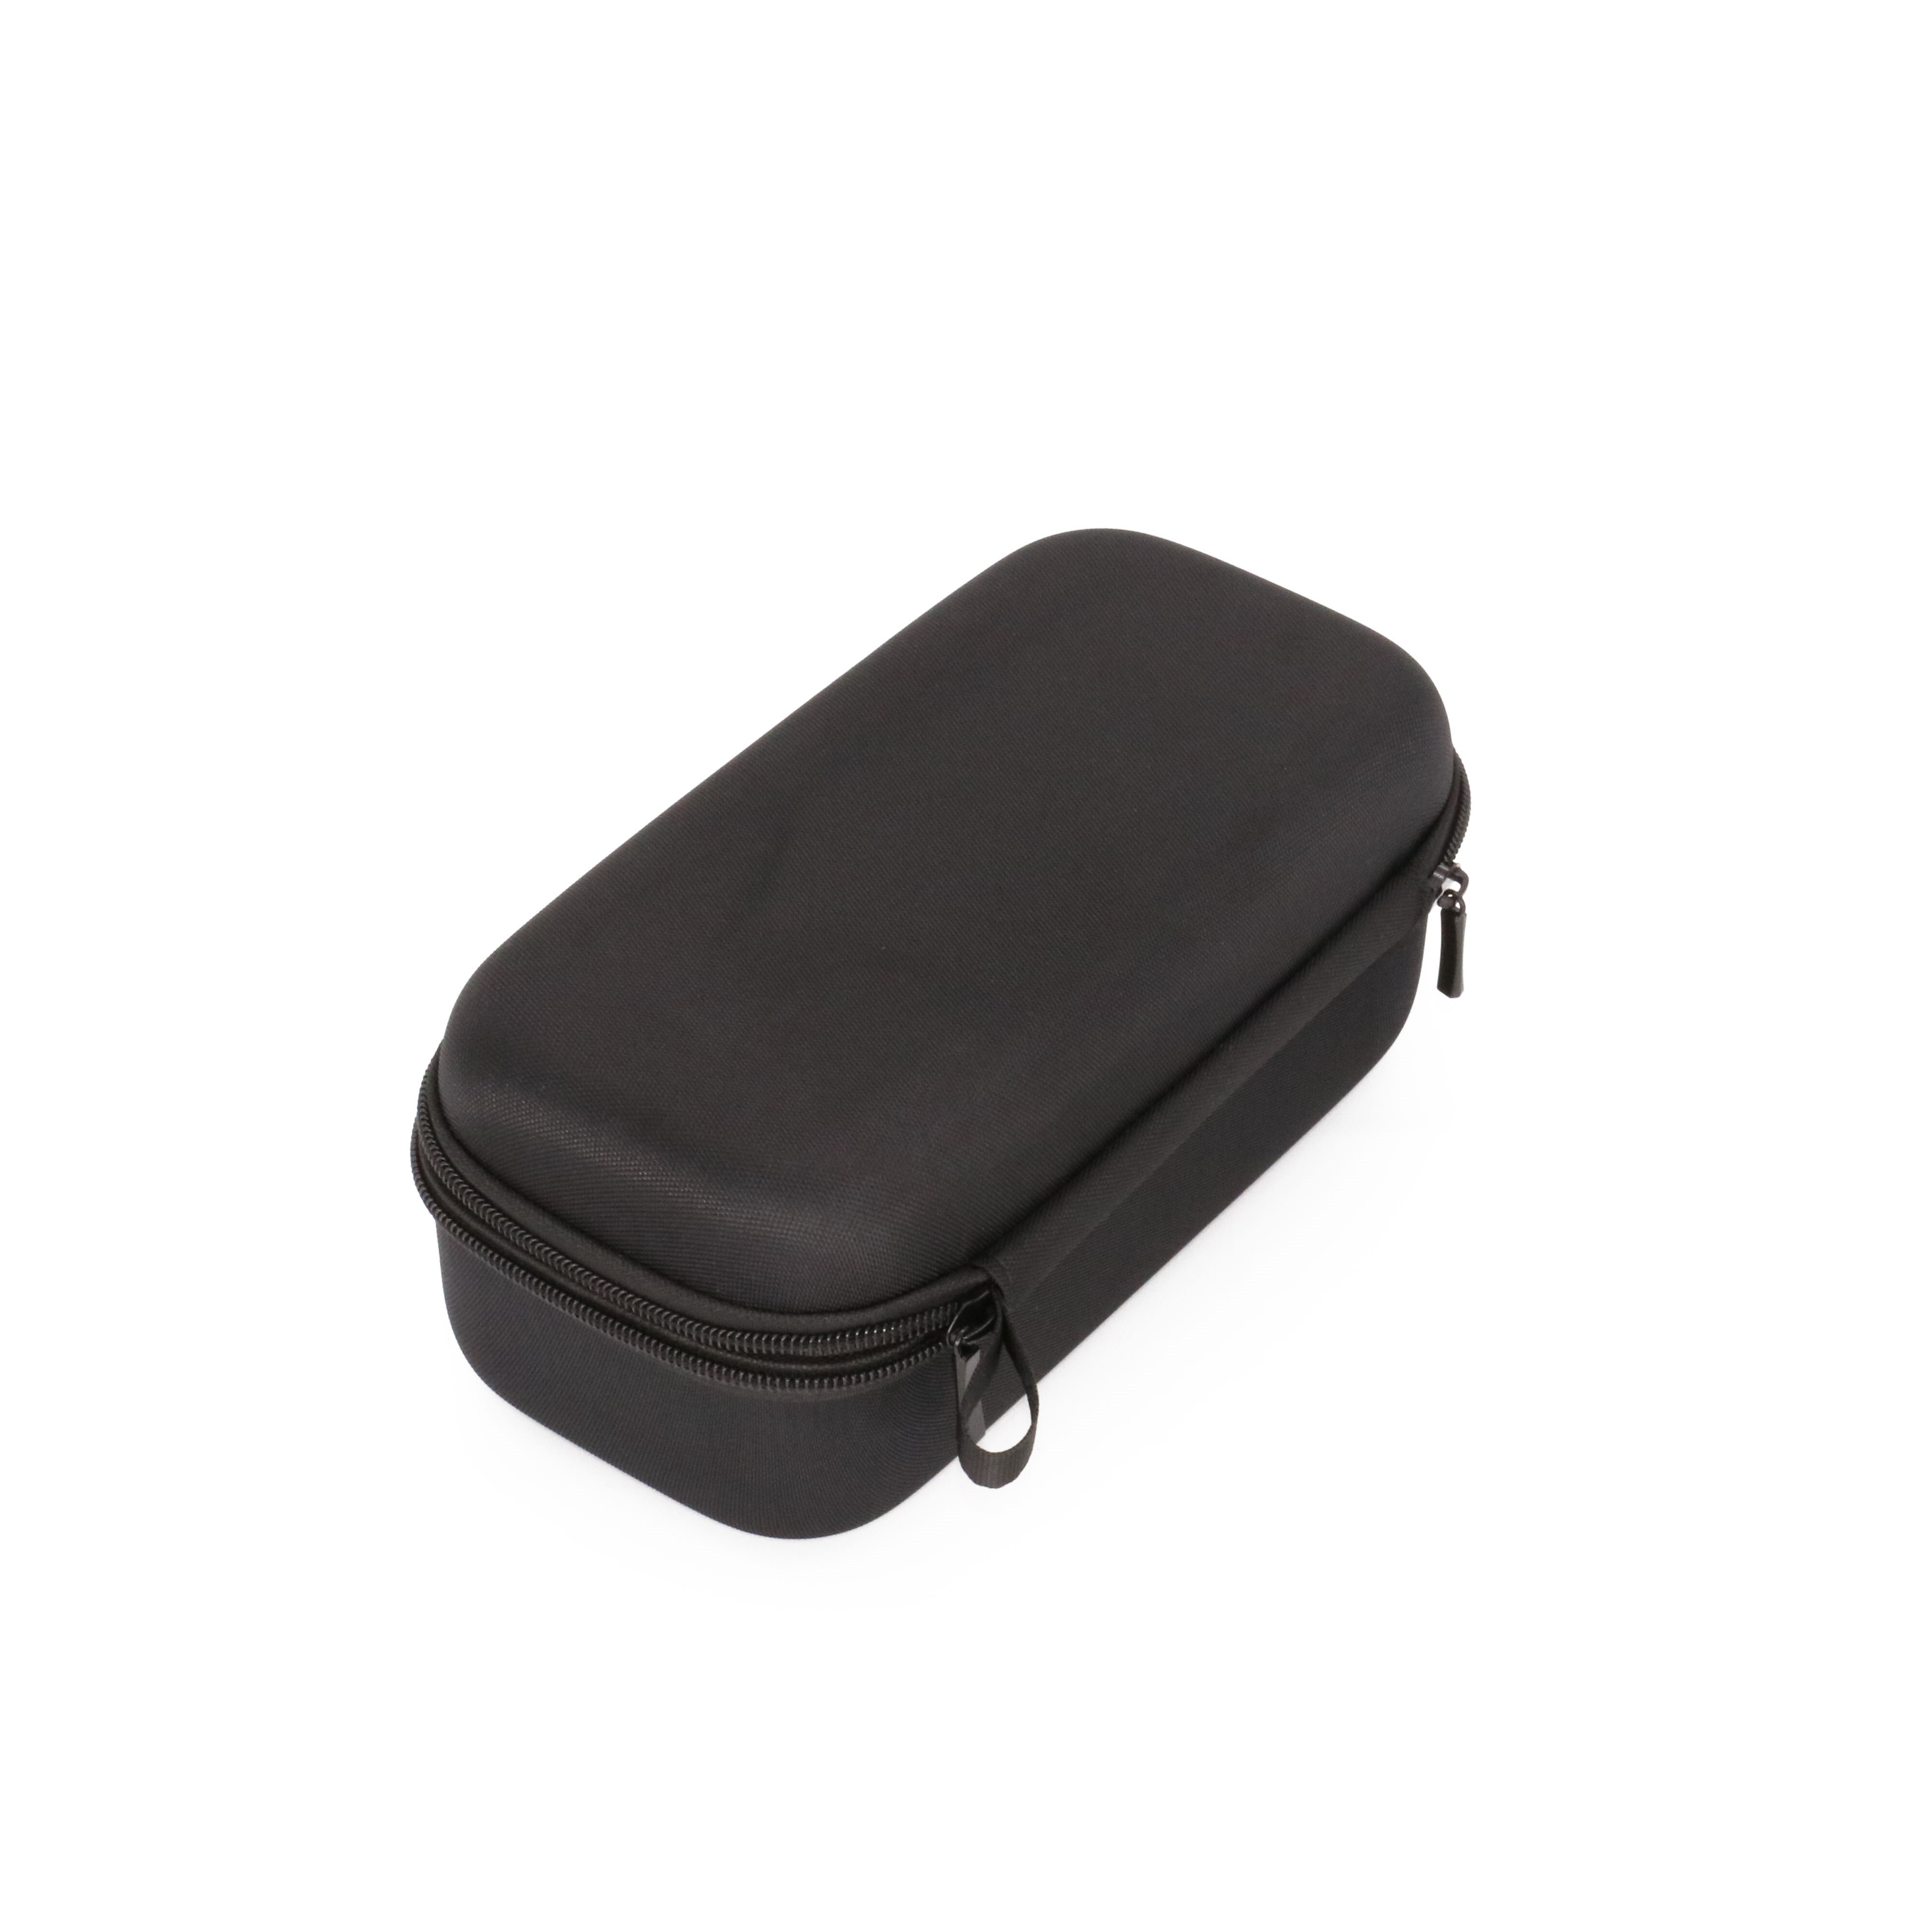 Case Bag Portable Carrying Case for DJI Mavic 2 Pro Zoom Drone Remote Controller Portable Case Protector: drone bag